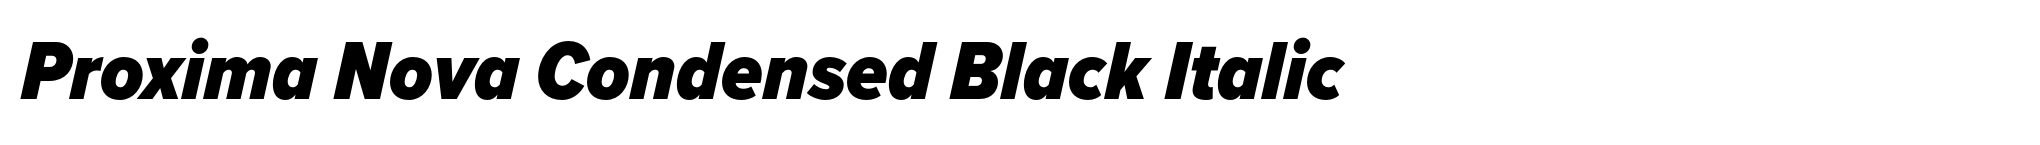 Proxima Nova Condensed Black Italic image